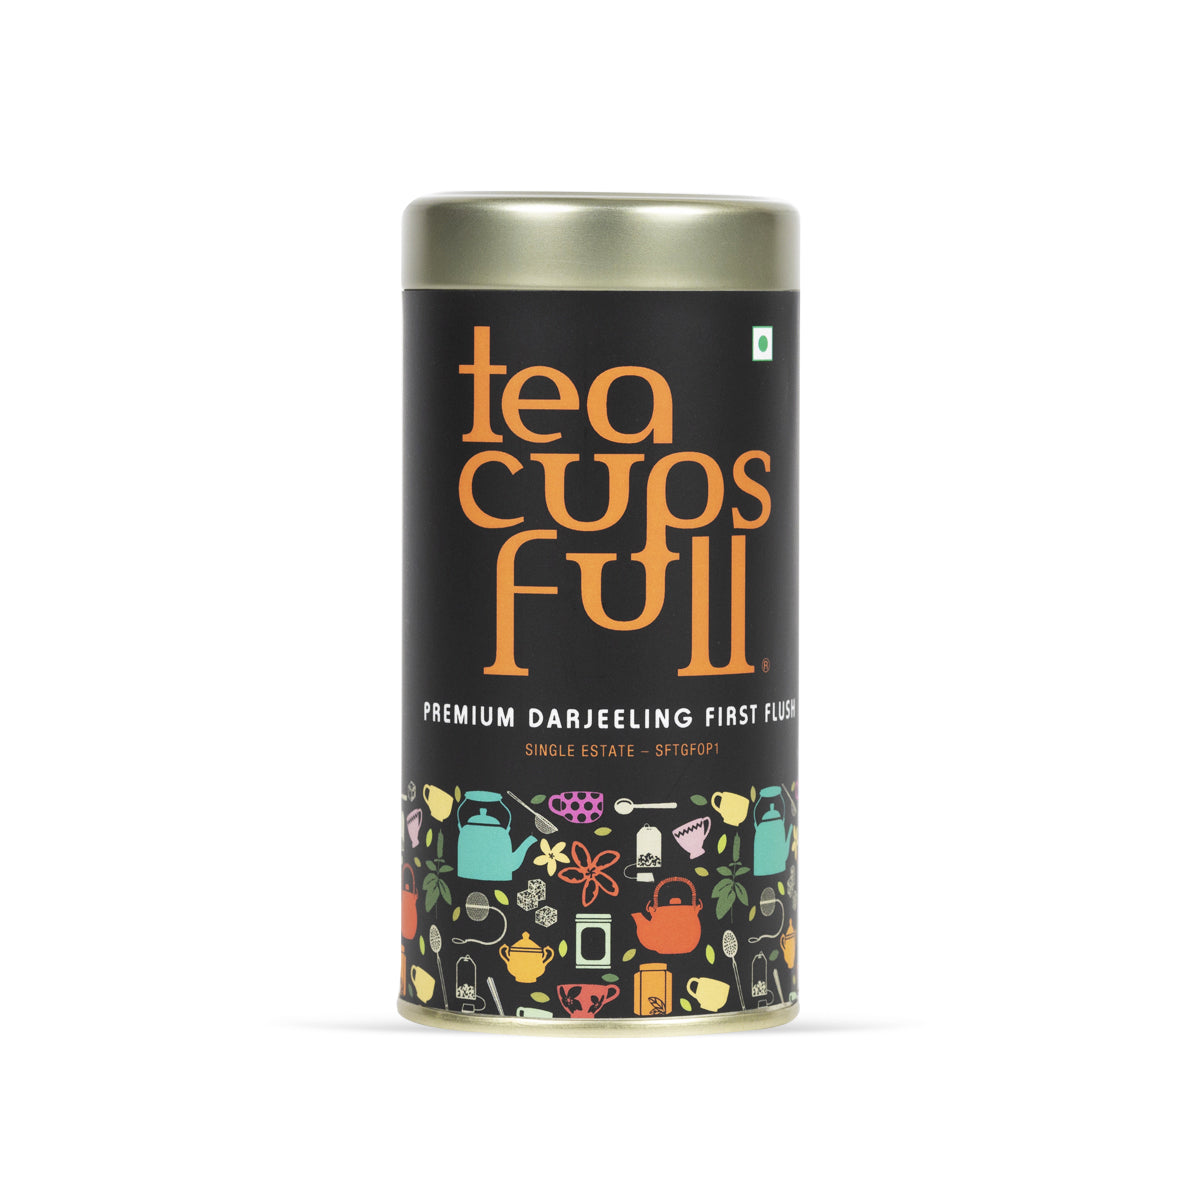 Premium Darjeeling Tea - First Flush